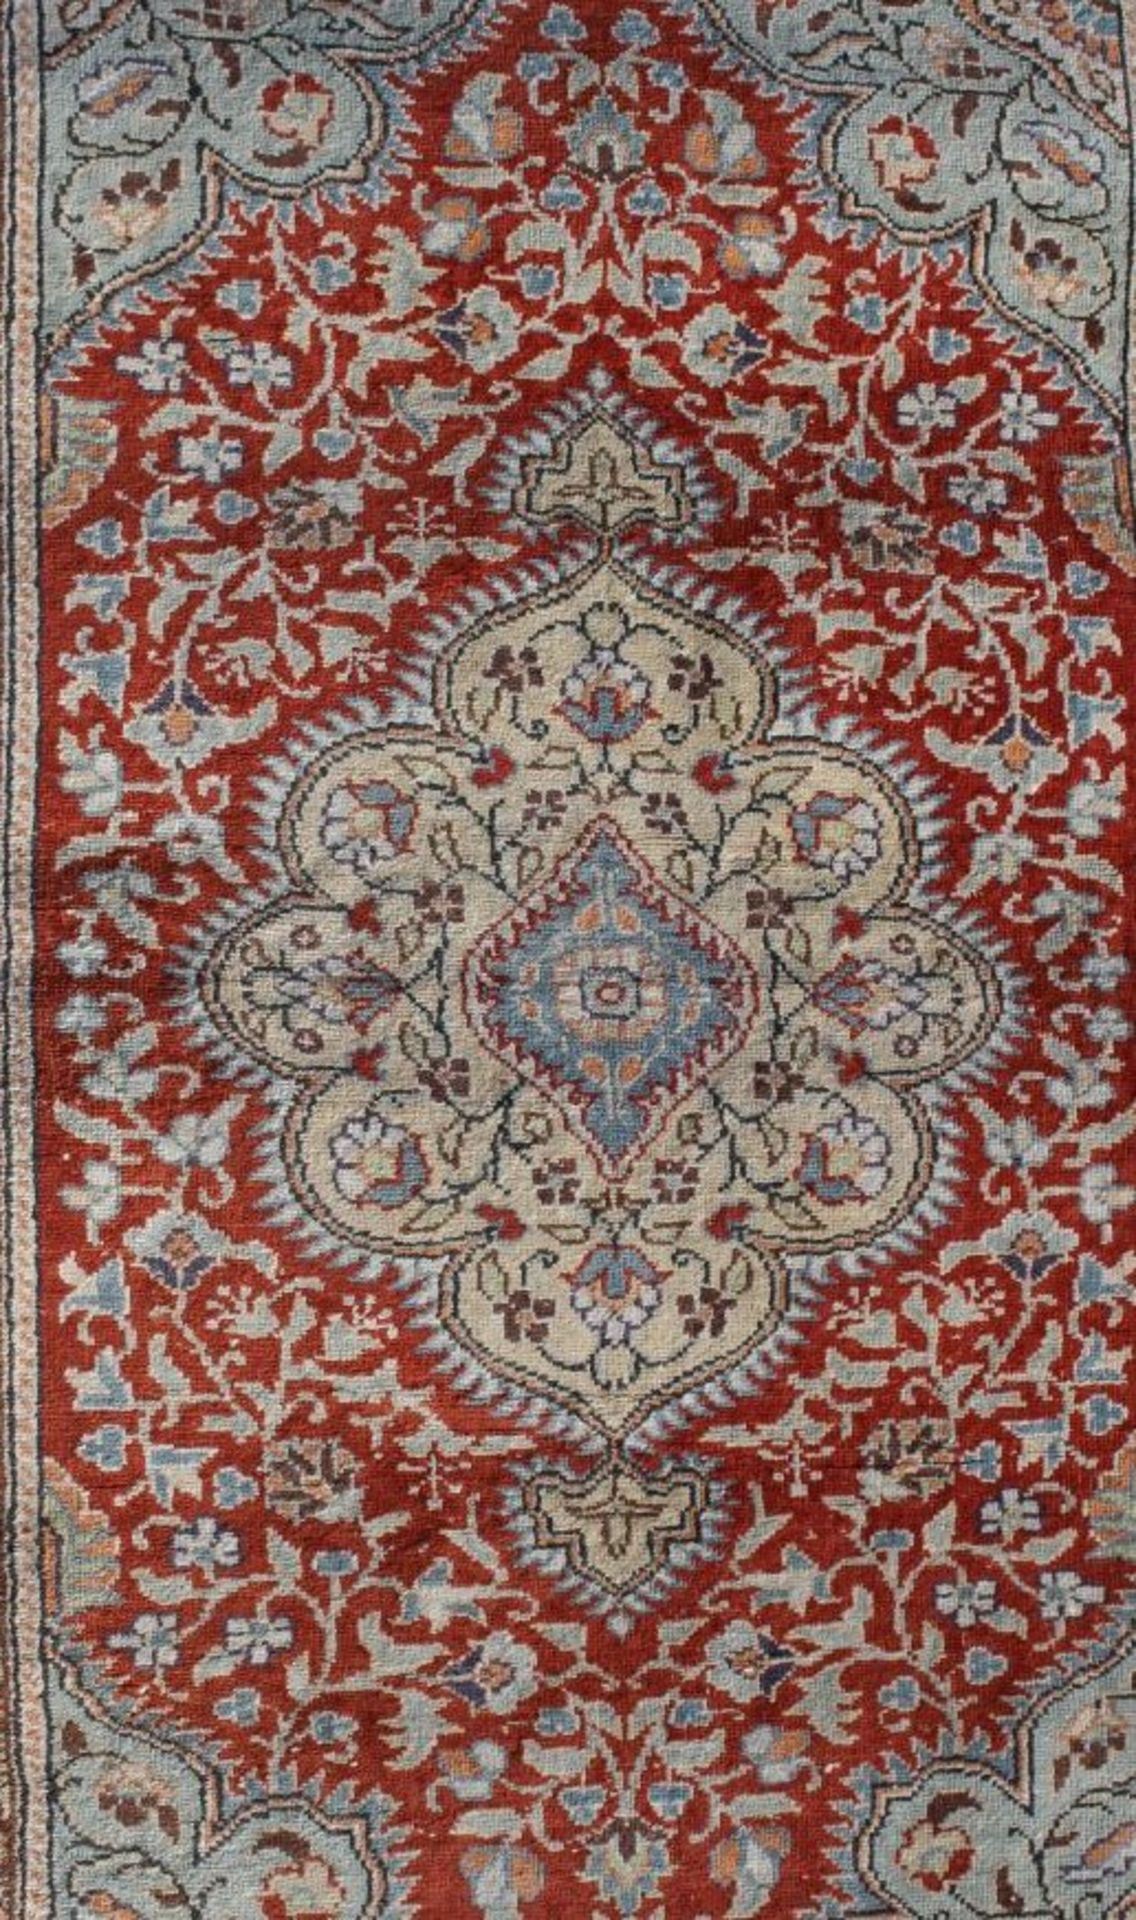 kl. Brücke, Kayseri, florales Muster, Baumwolle/Seide, guter Zustand, Zertifikat anbei, 134 x 89cm. - Bild 3 aus 6